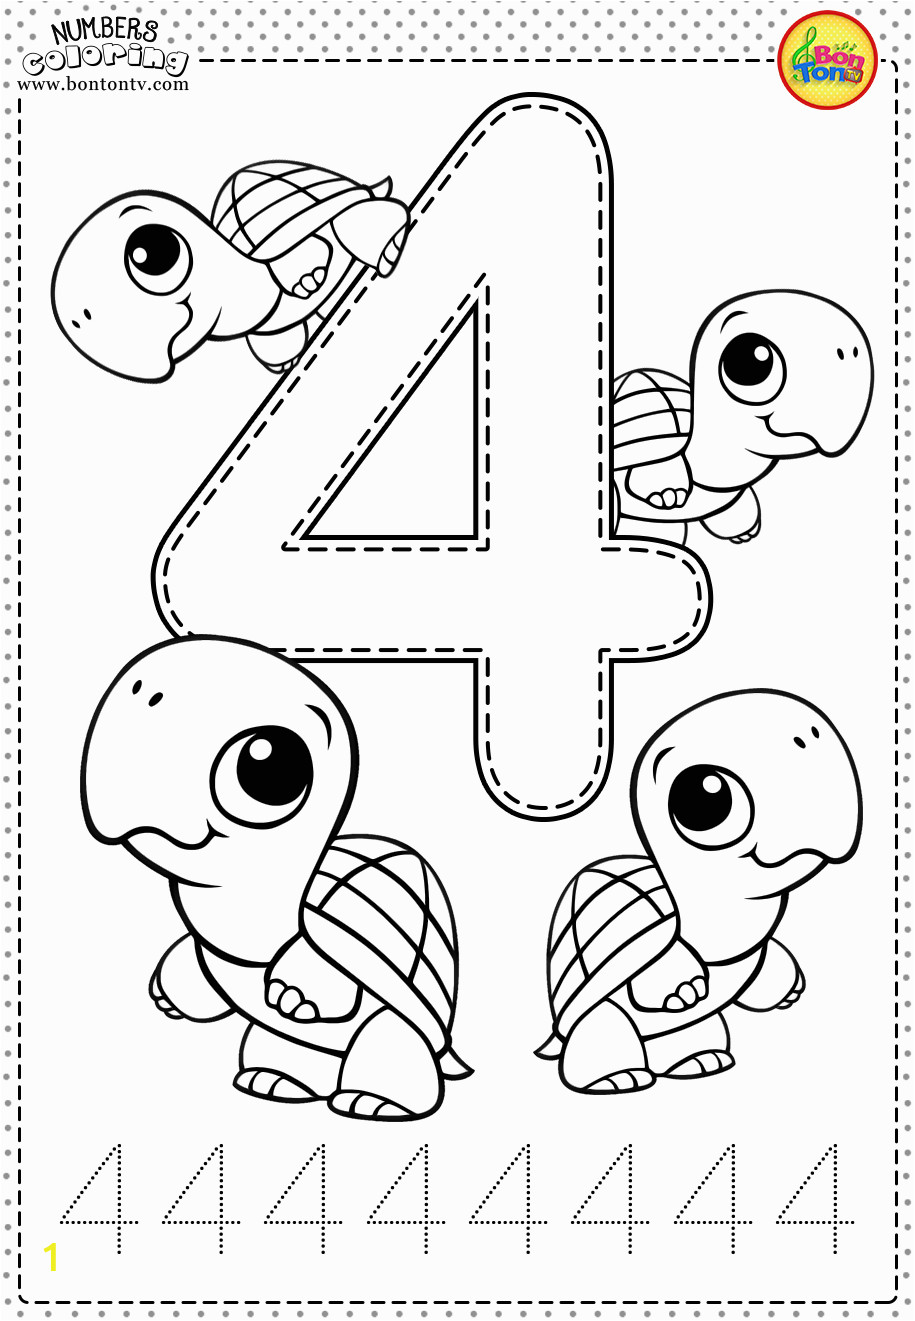 Coloring by Numbers Pages Printable Number 4 Preschool Printables Free Worksheets and